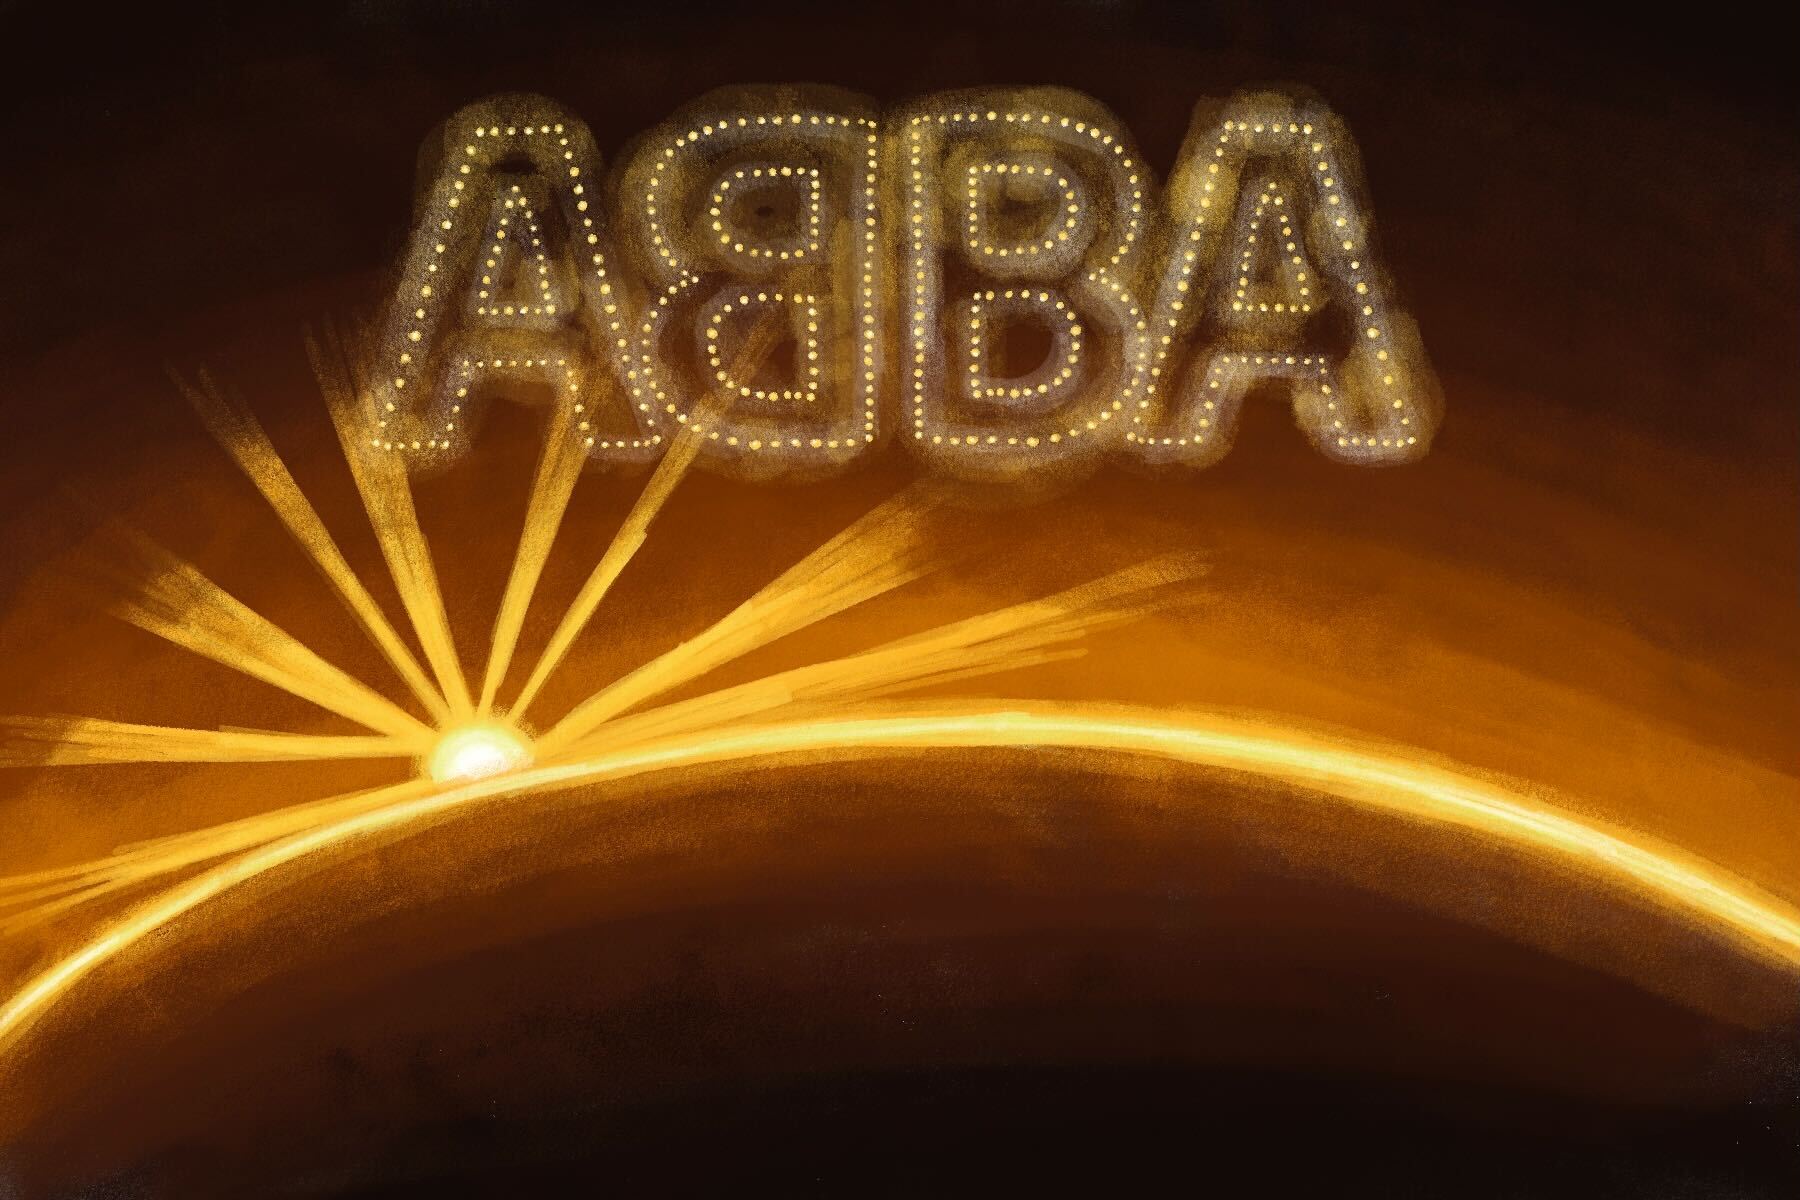 Illustration of the ABBA logo